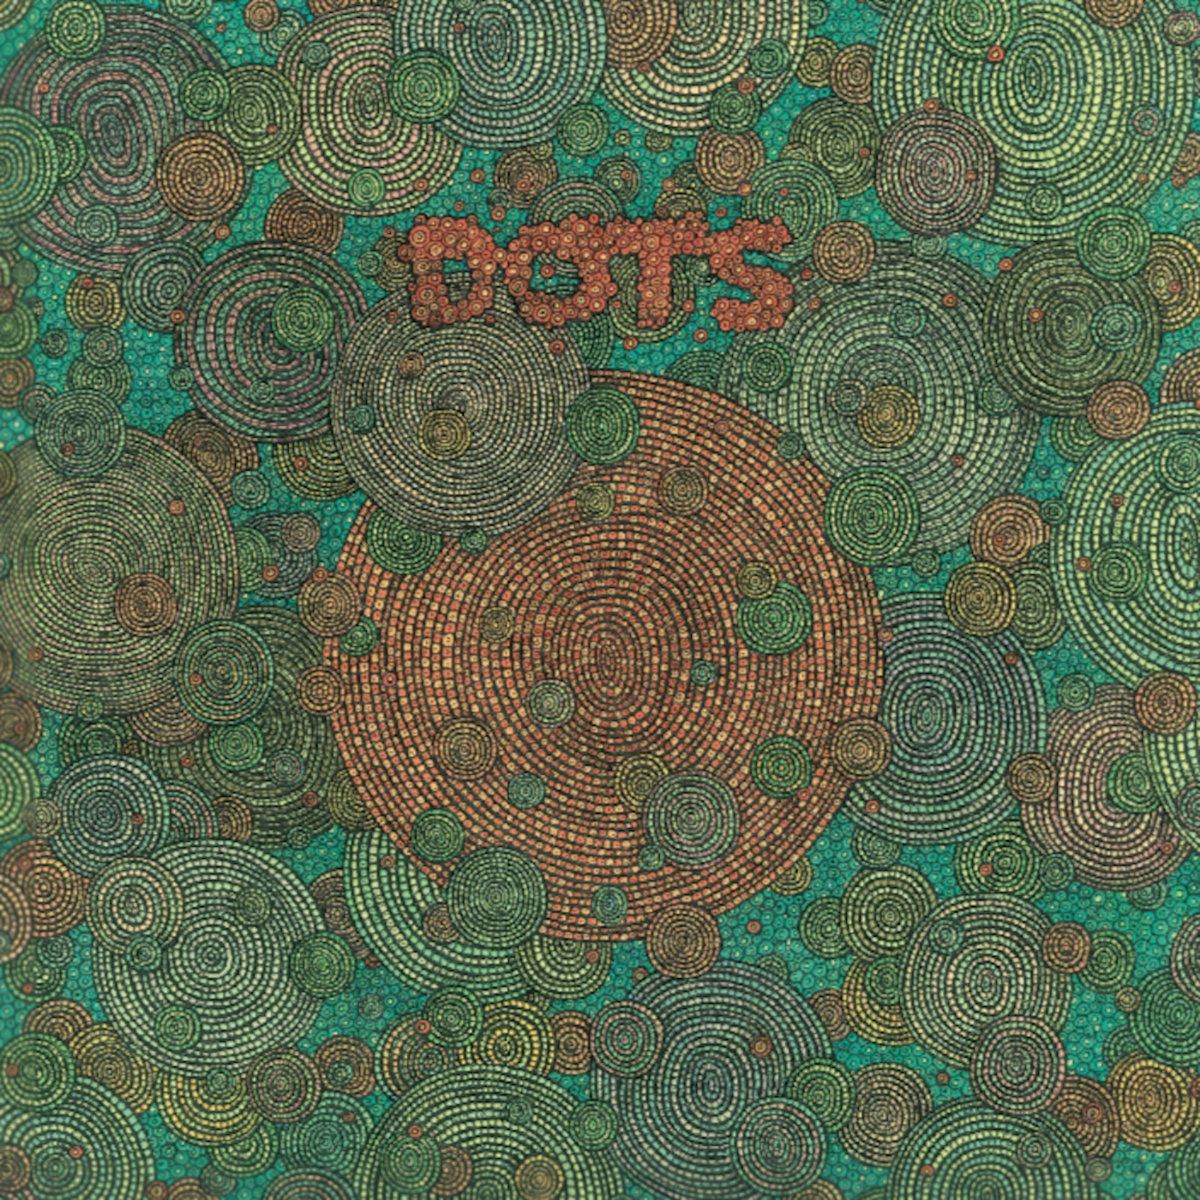 Dots (Atom™) – Dots